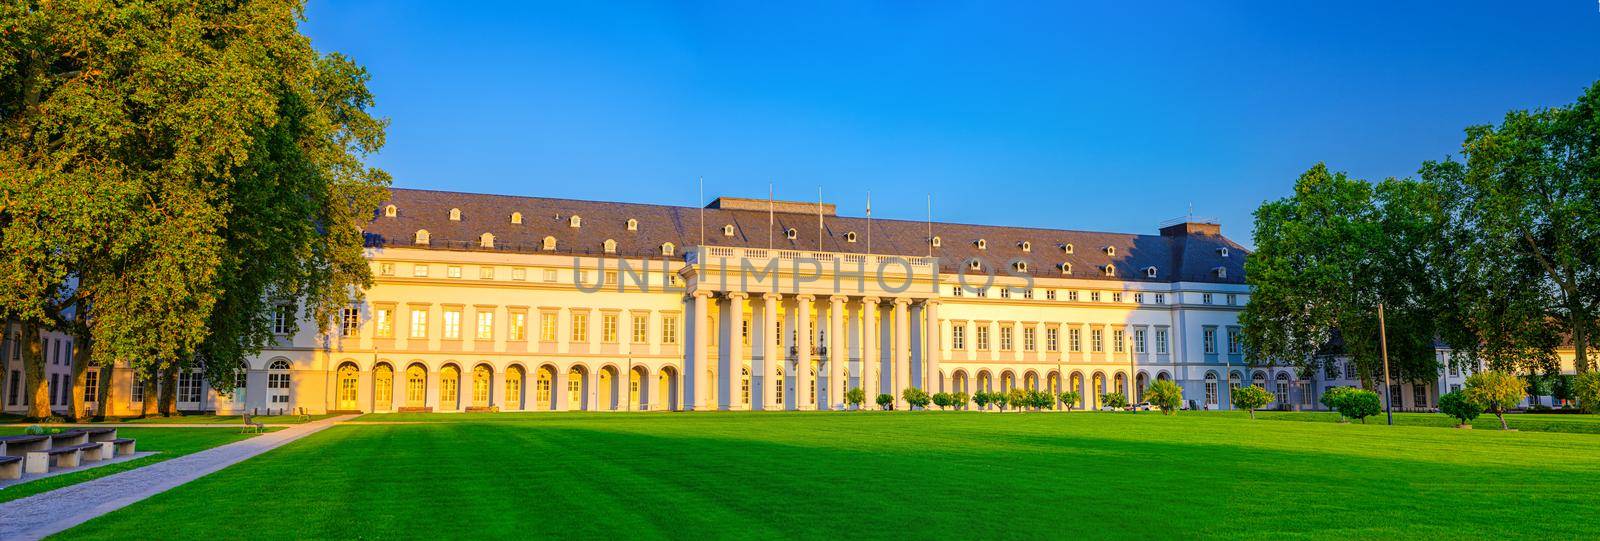 Electoral Palace Schloss building in Koblenz by Aliaksandr_Antanovich